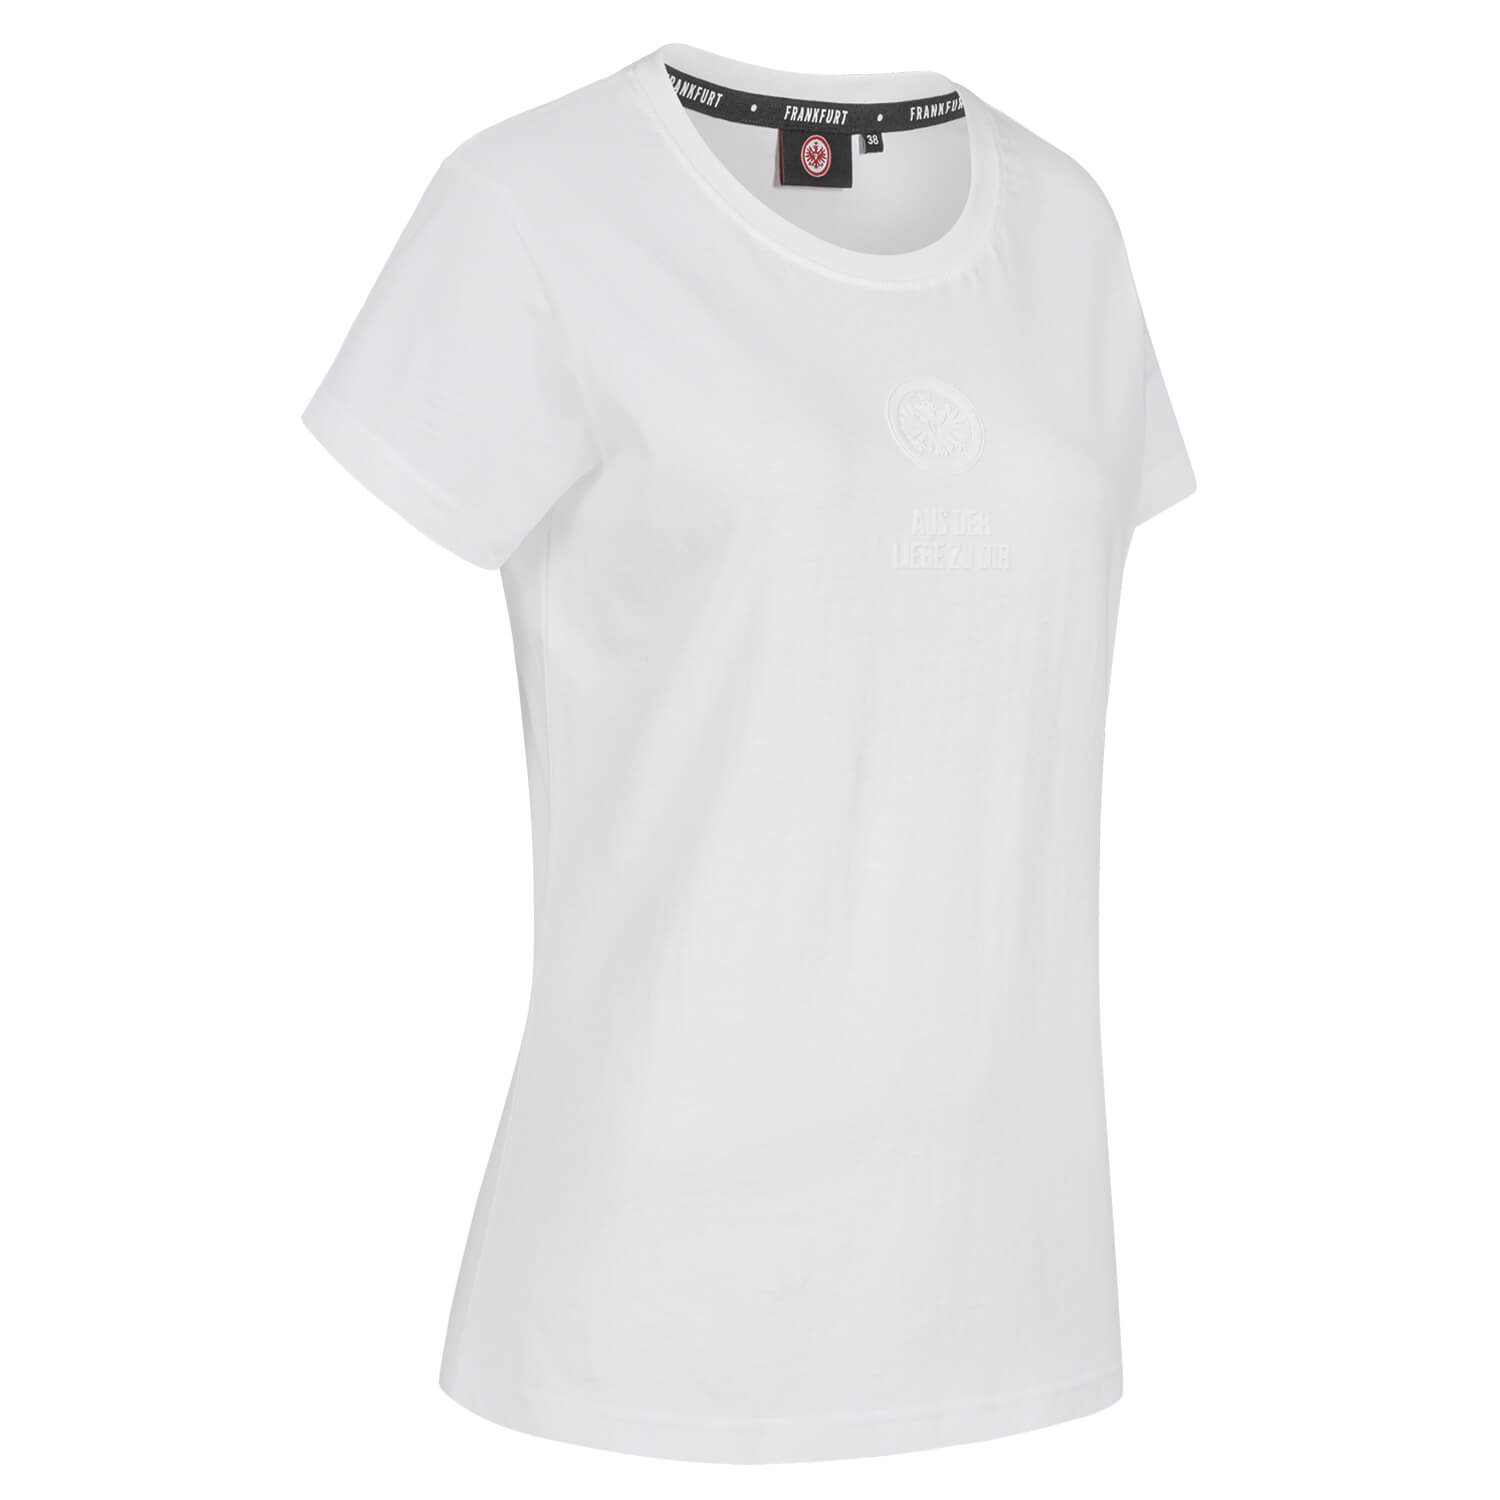 Bild 4: Damen T-Shirt White Badge